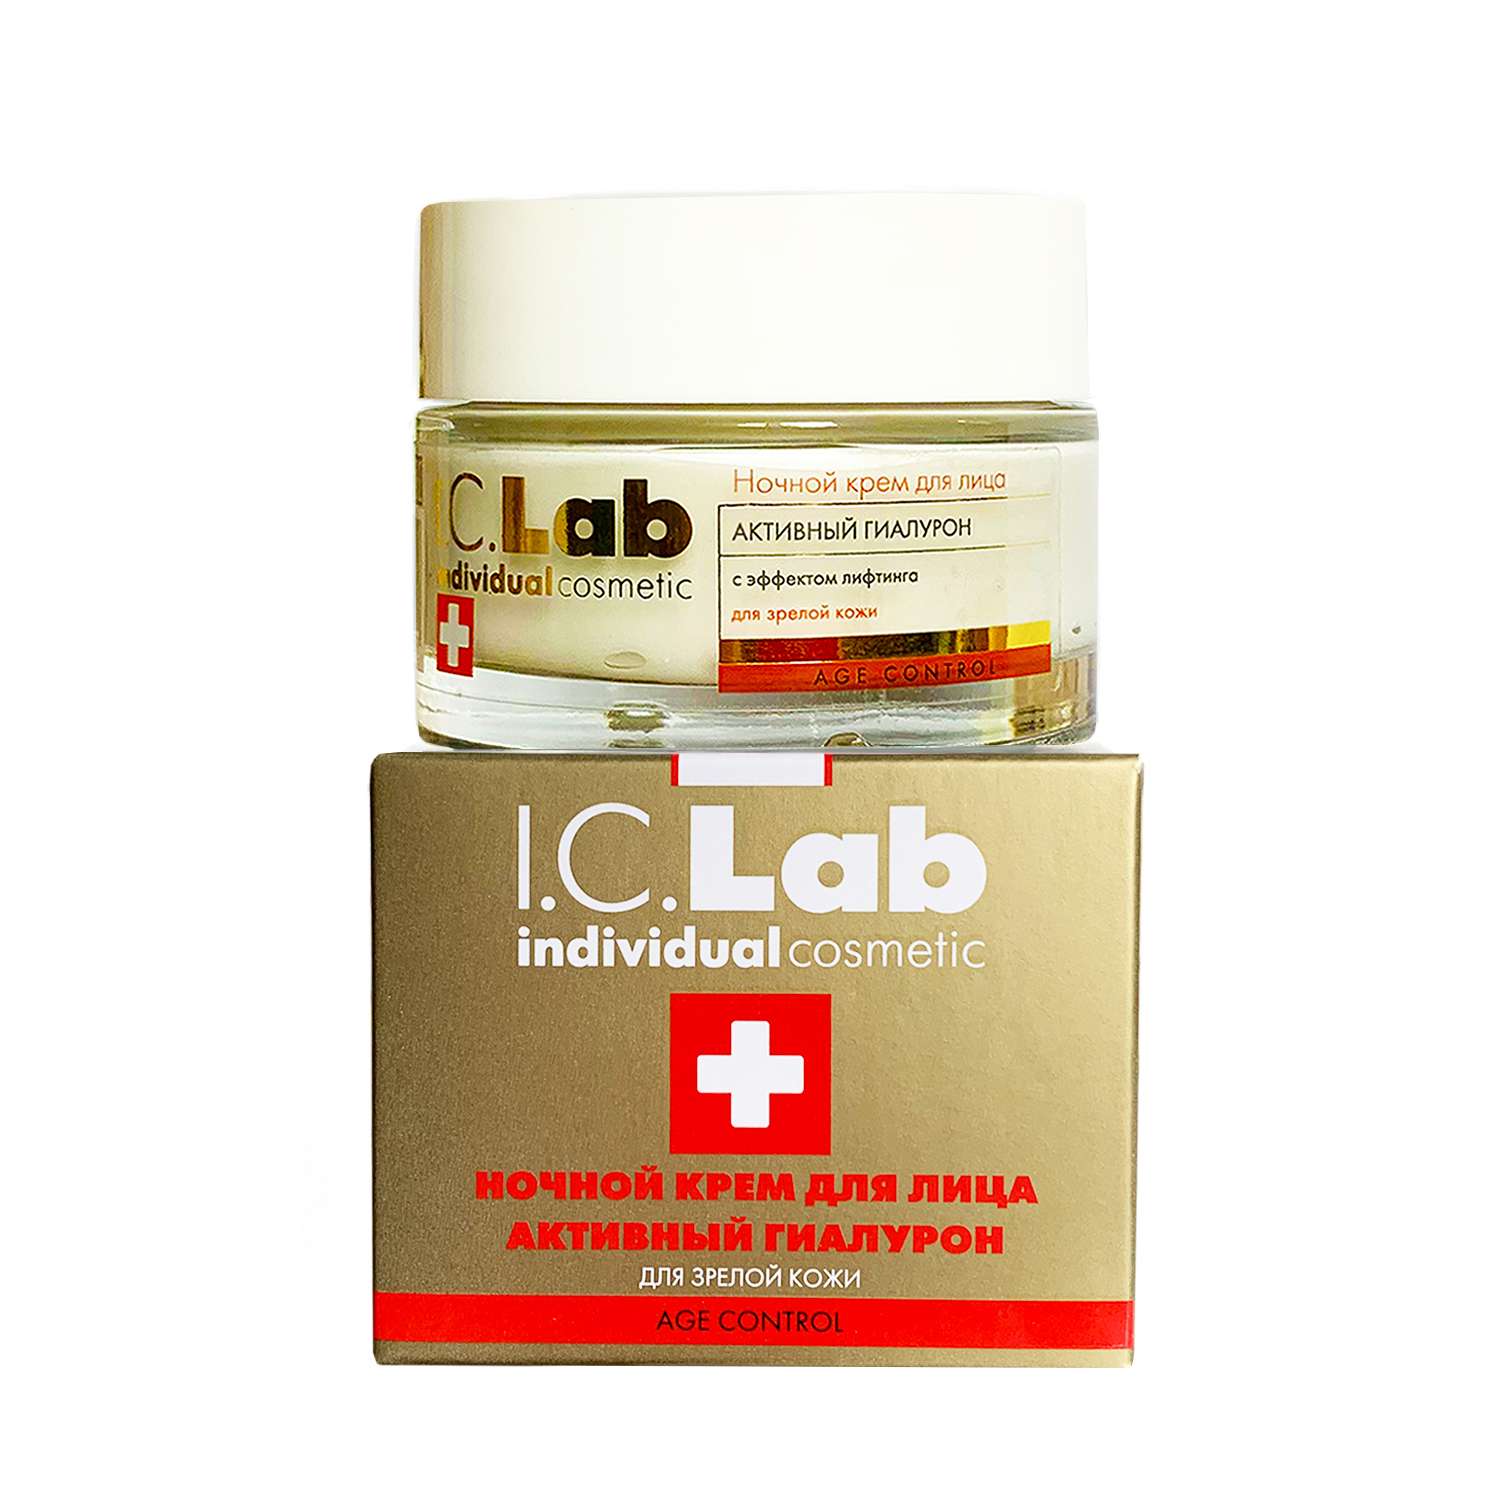 Крем для лица I.C.Lab Individual cosmetic Ночной активный гиалурон 50 мл - фото 8